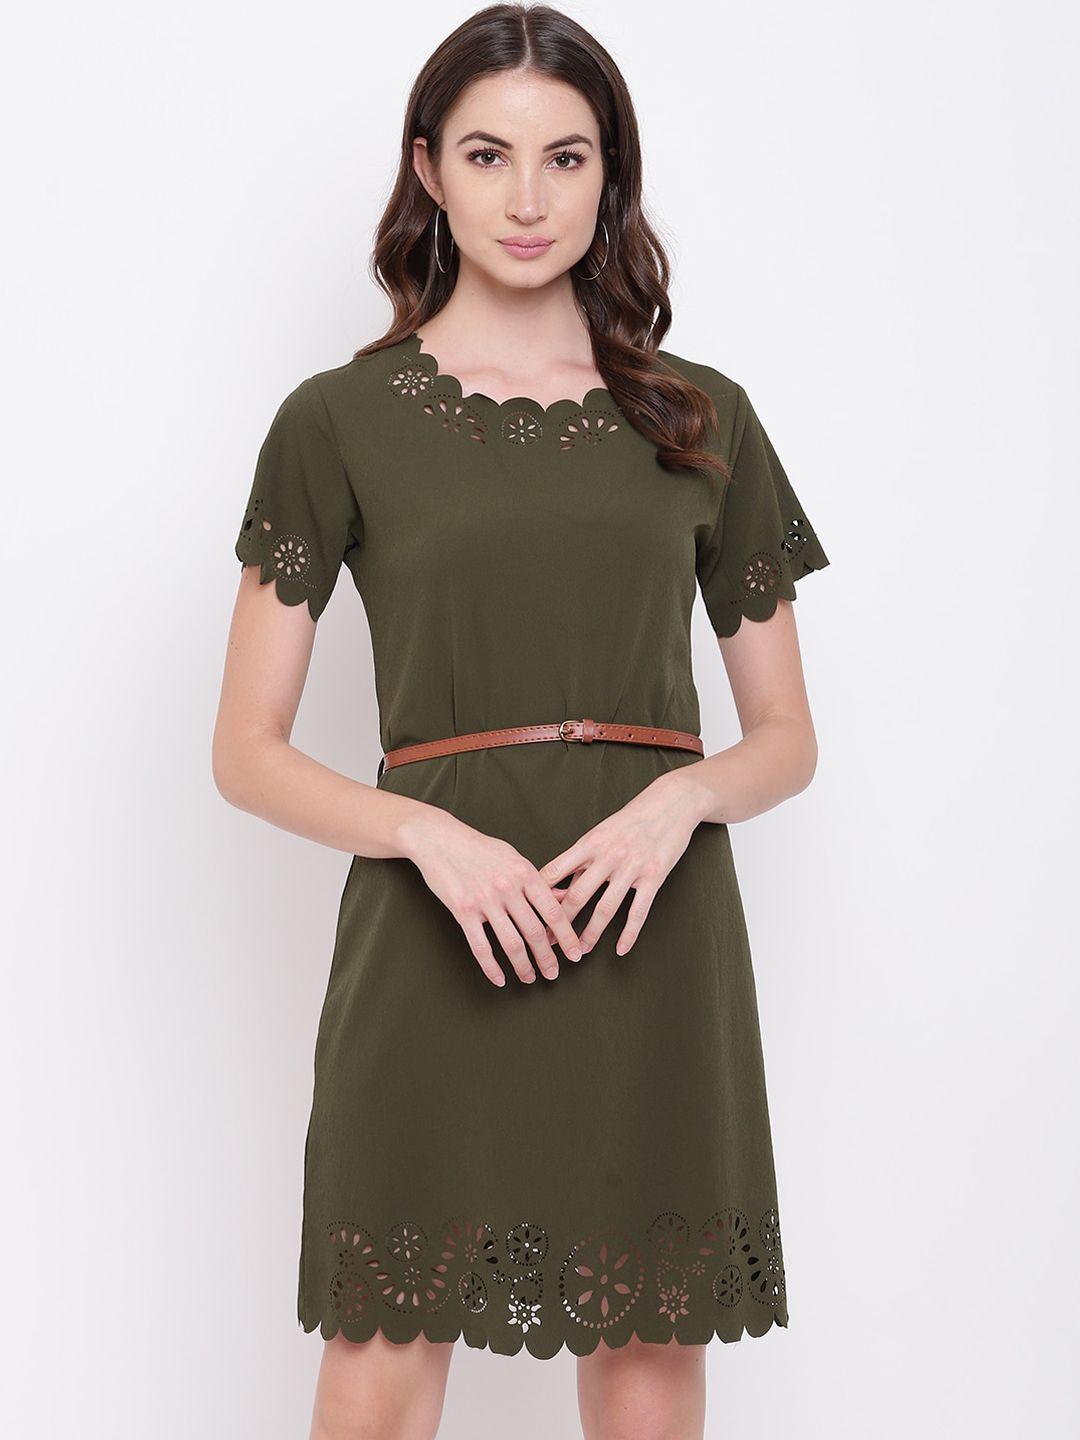 mayra-women-olive-green-solid-sheath-dress